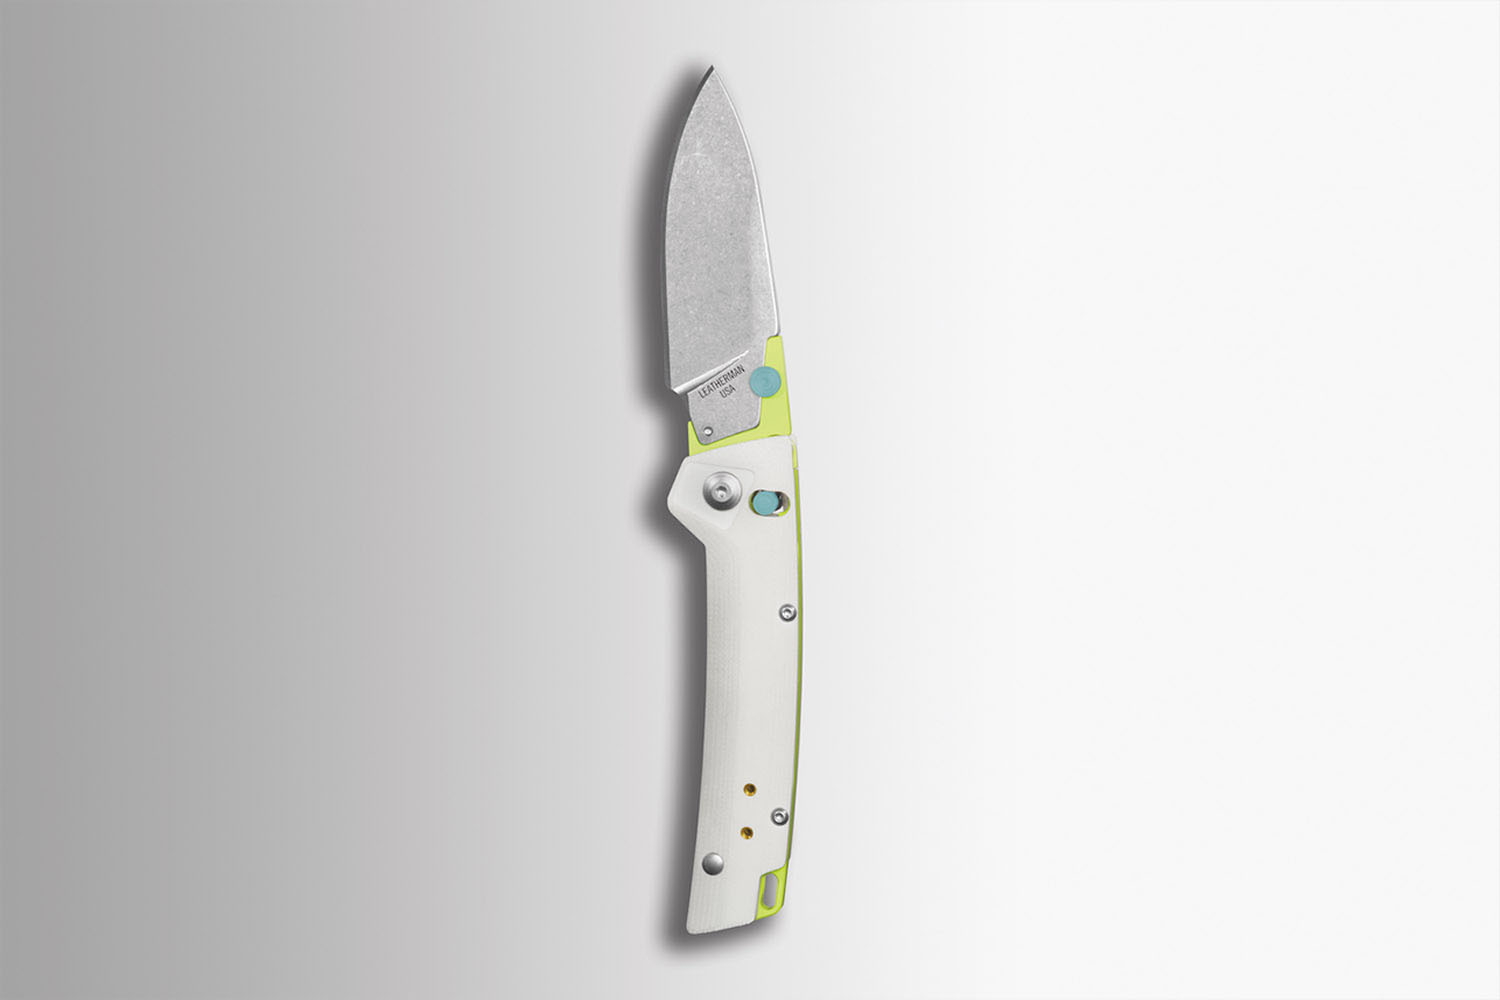 a Leatherman custom knife on a grey background